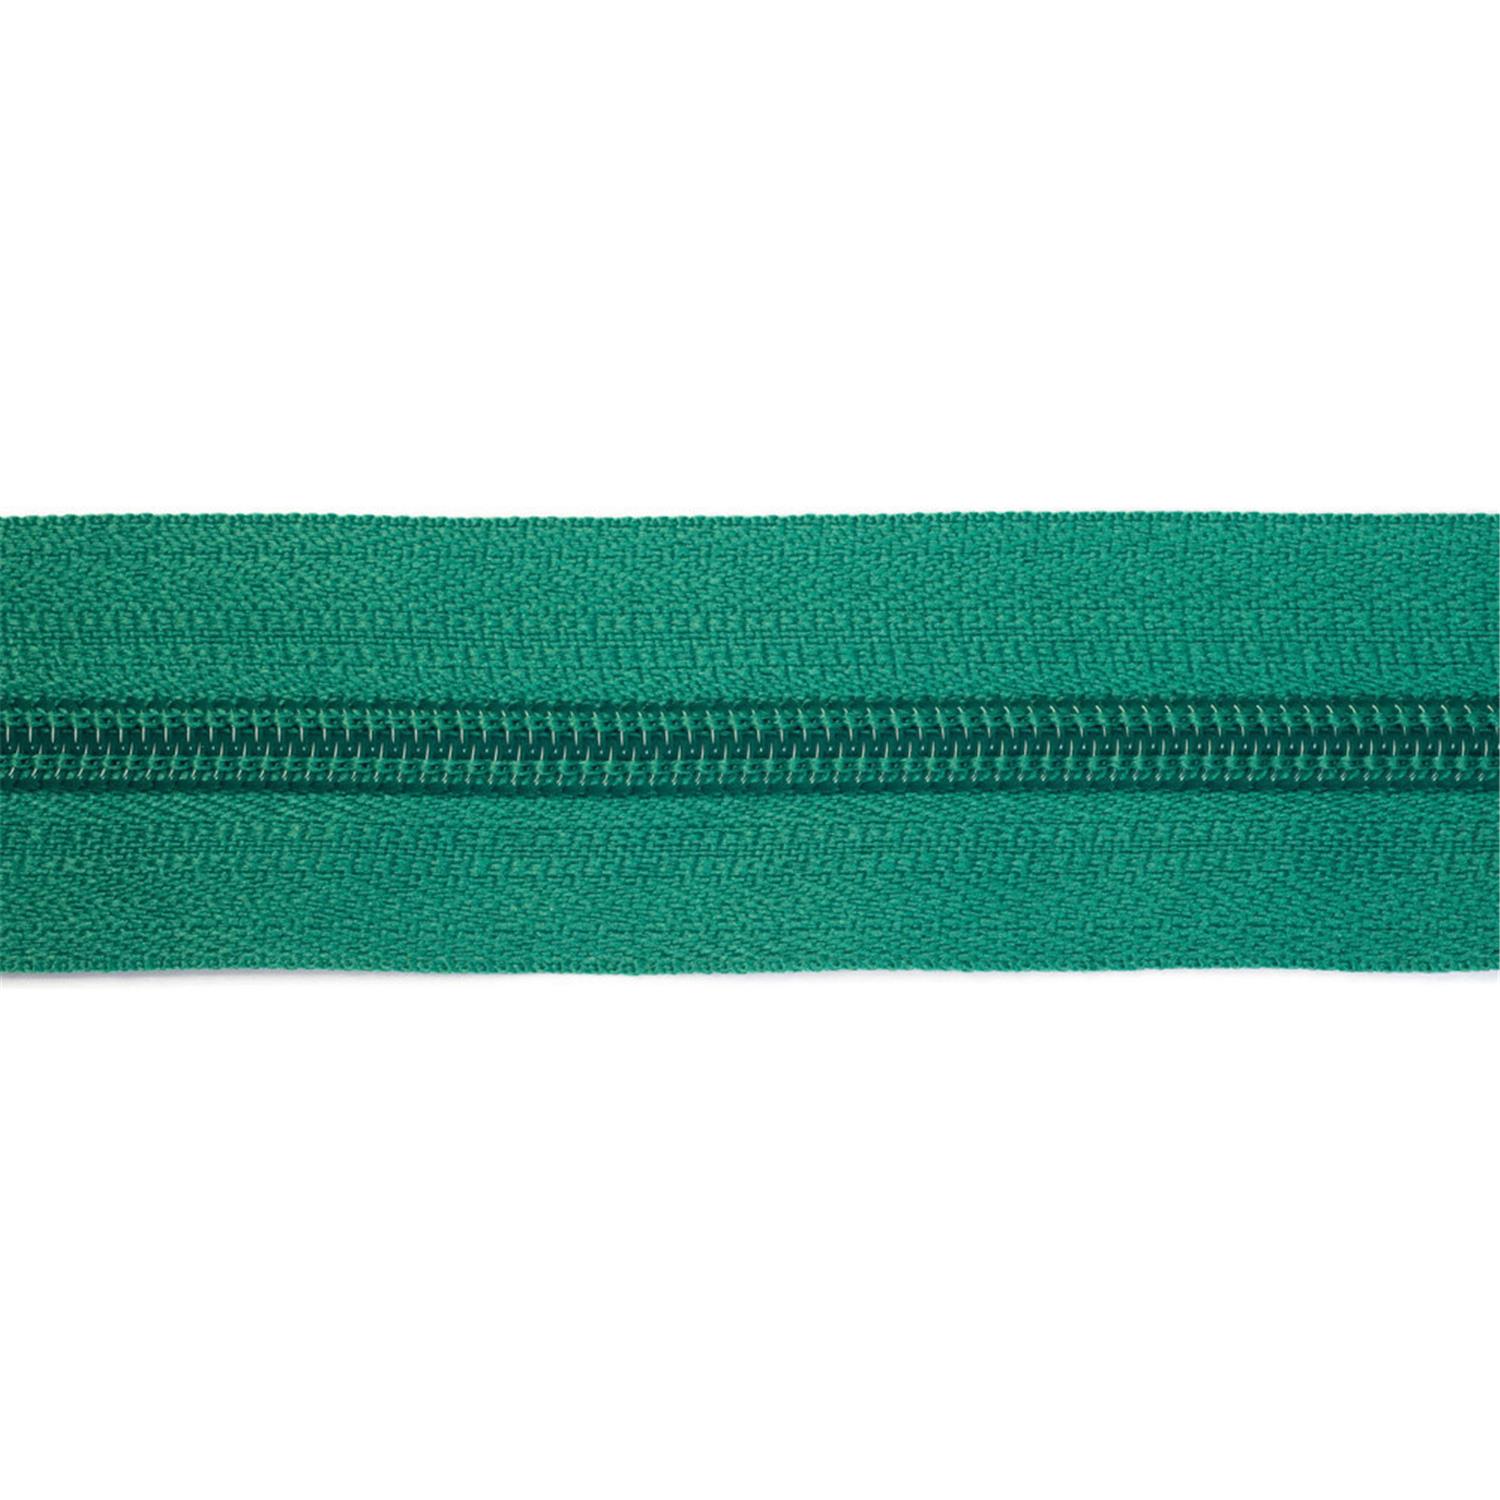 Reißverschluss endlos 5mm smaragdgrün #79 50 Meter Rolle